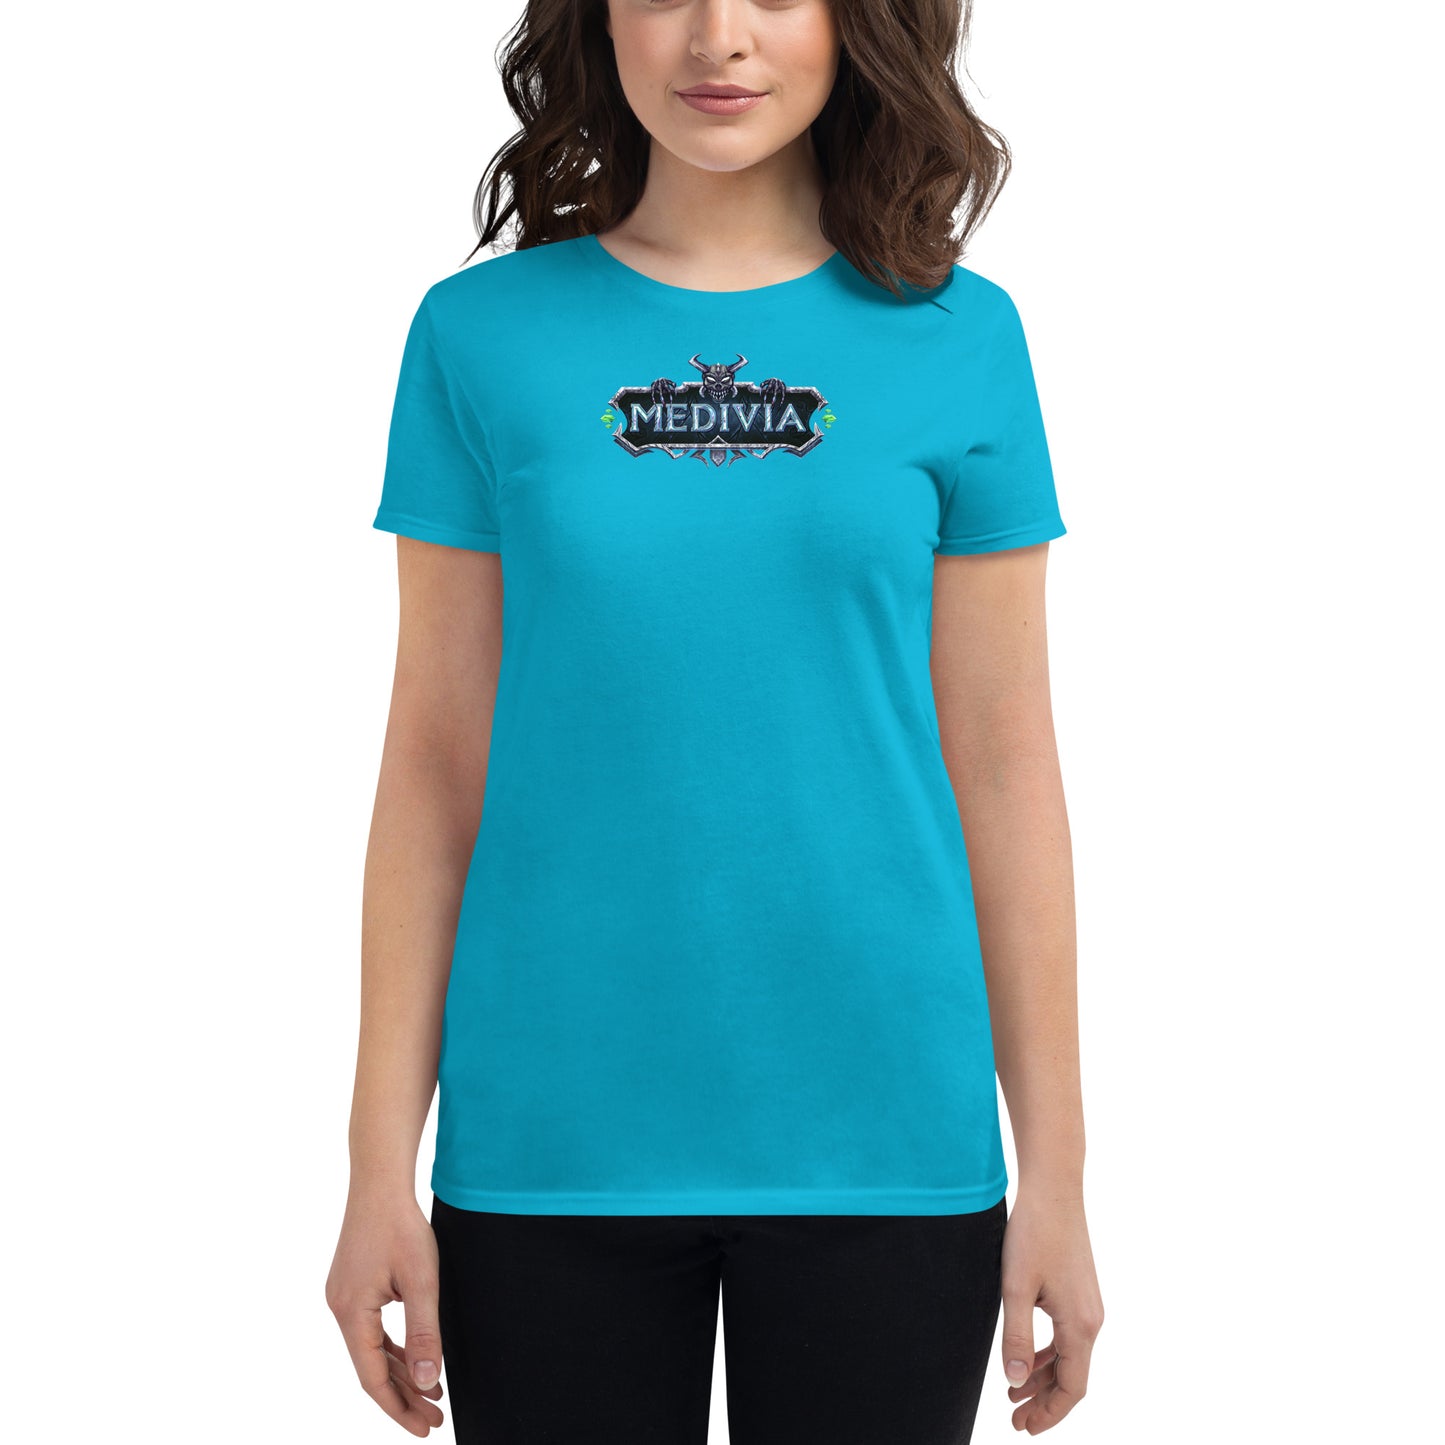 Medivia Logo Women's Fashion Fit T-Shirt